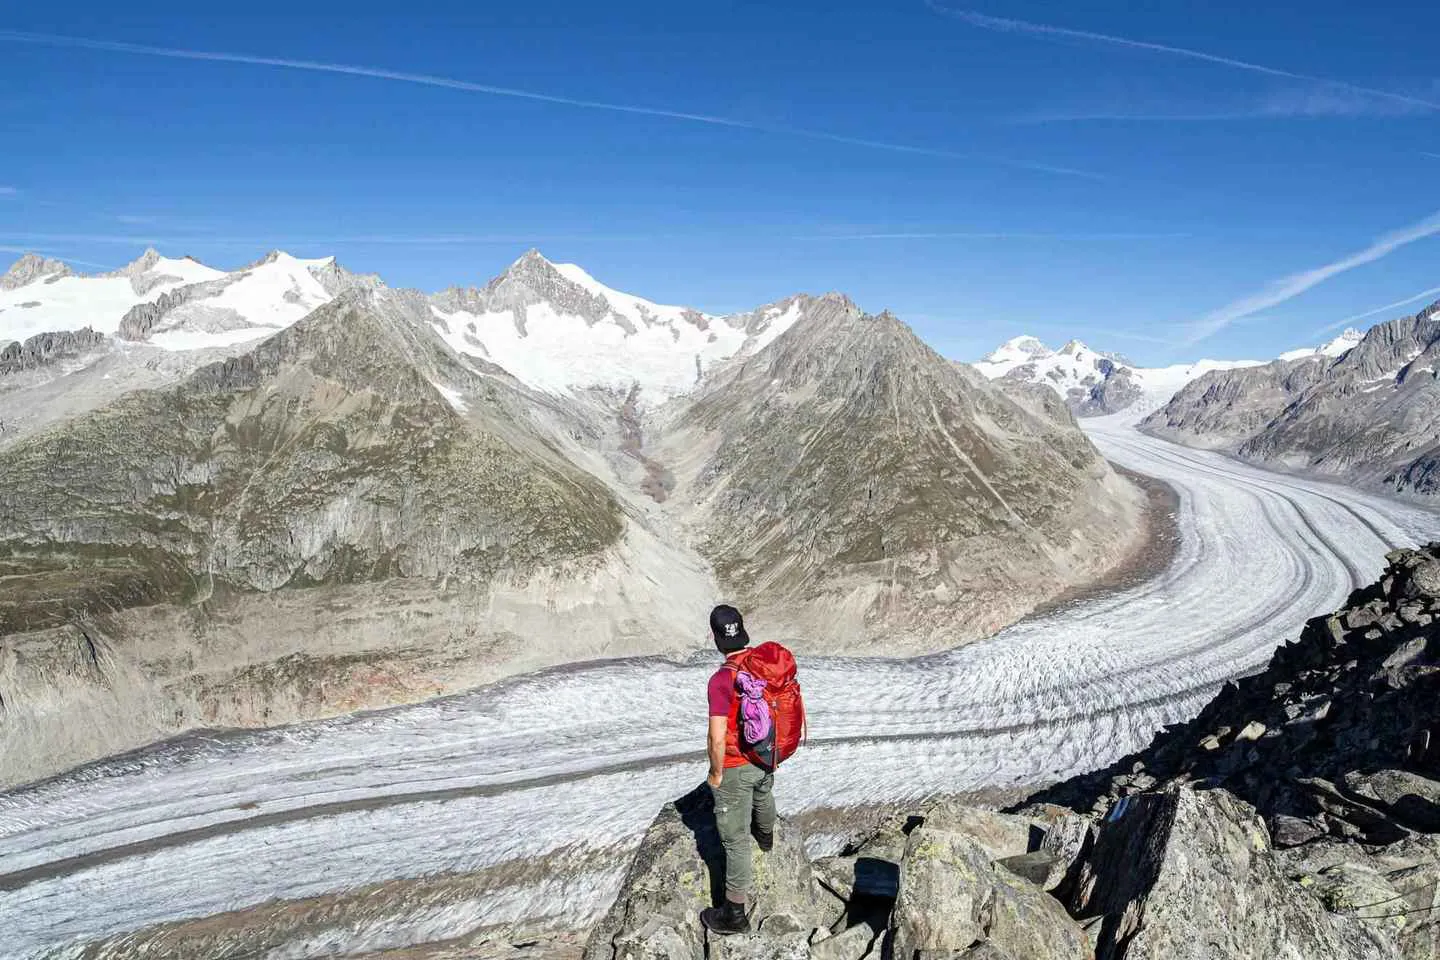 The Aletsch Glacier, the longest glacier in the Alps